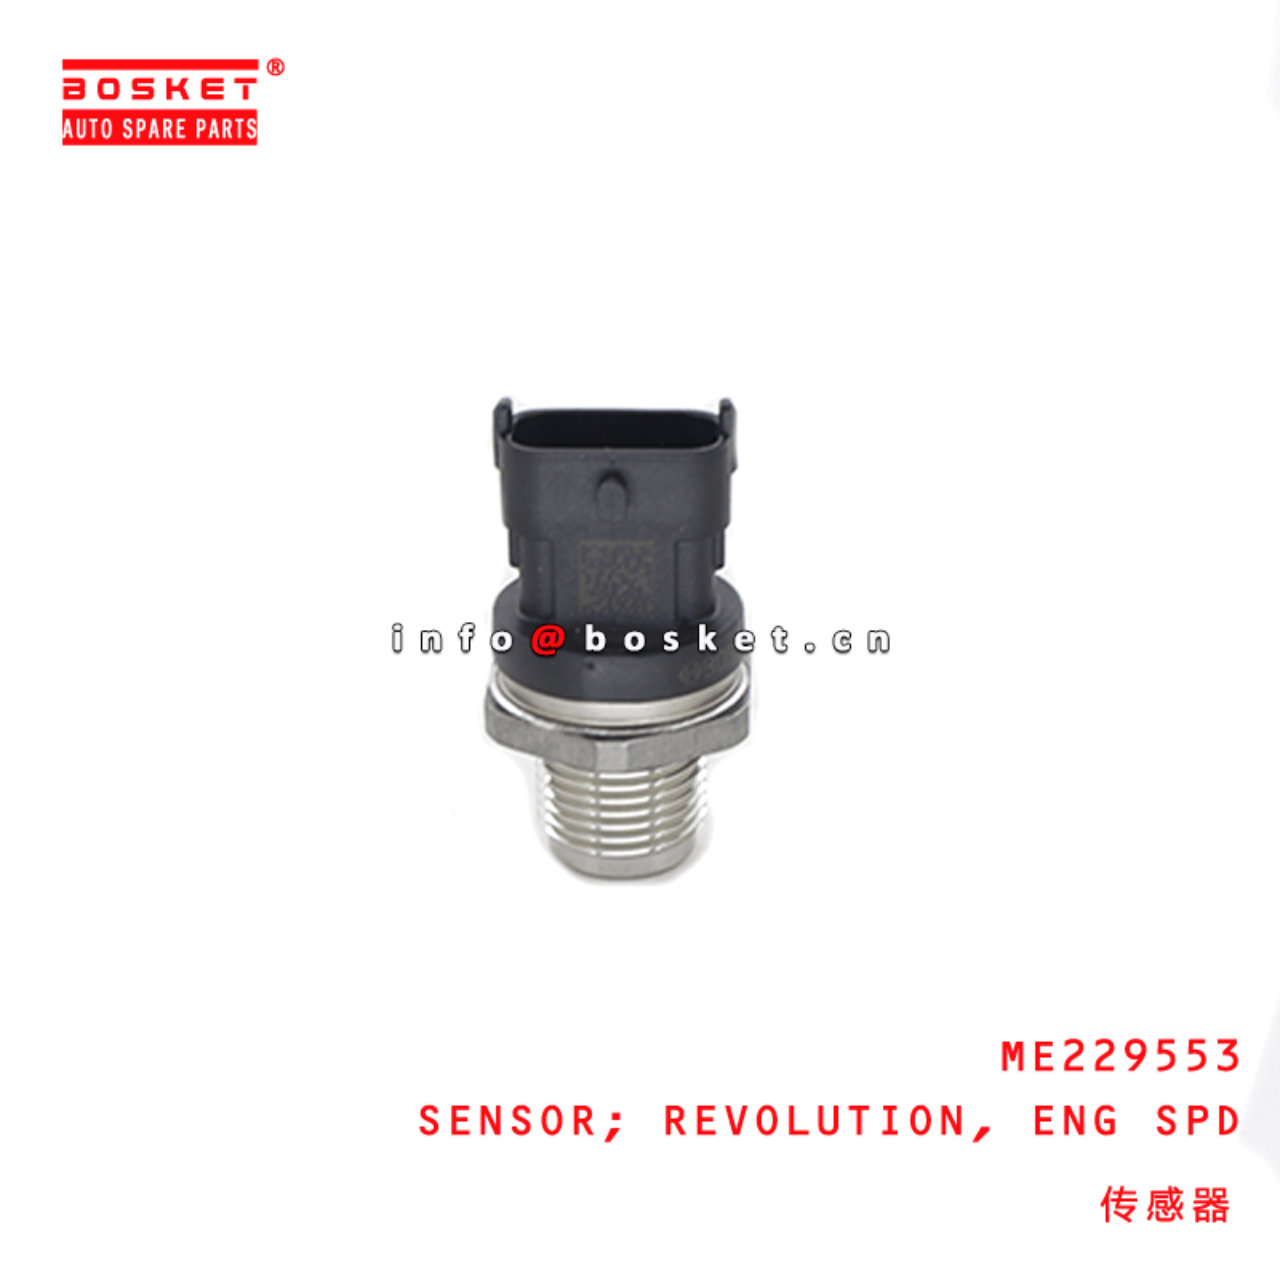  ME229553 Engine Speed Revolution Sensor Suitable For MITSUBISHI FUSO